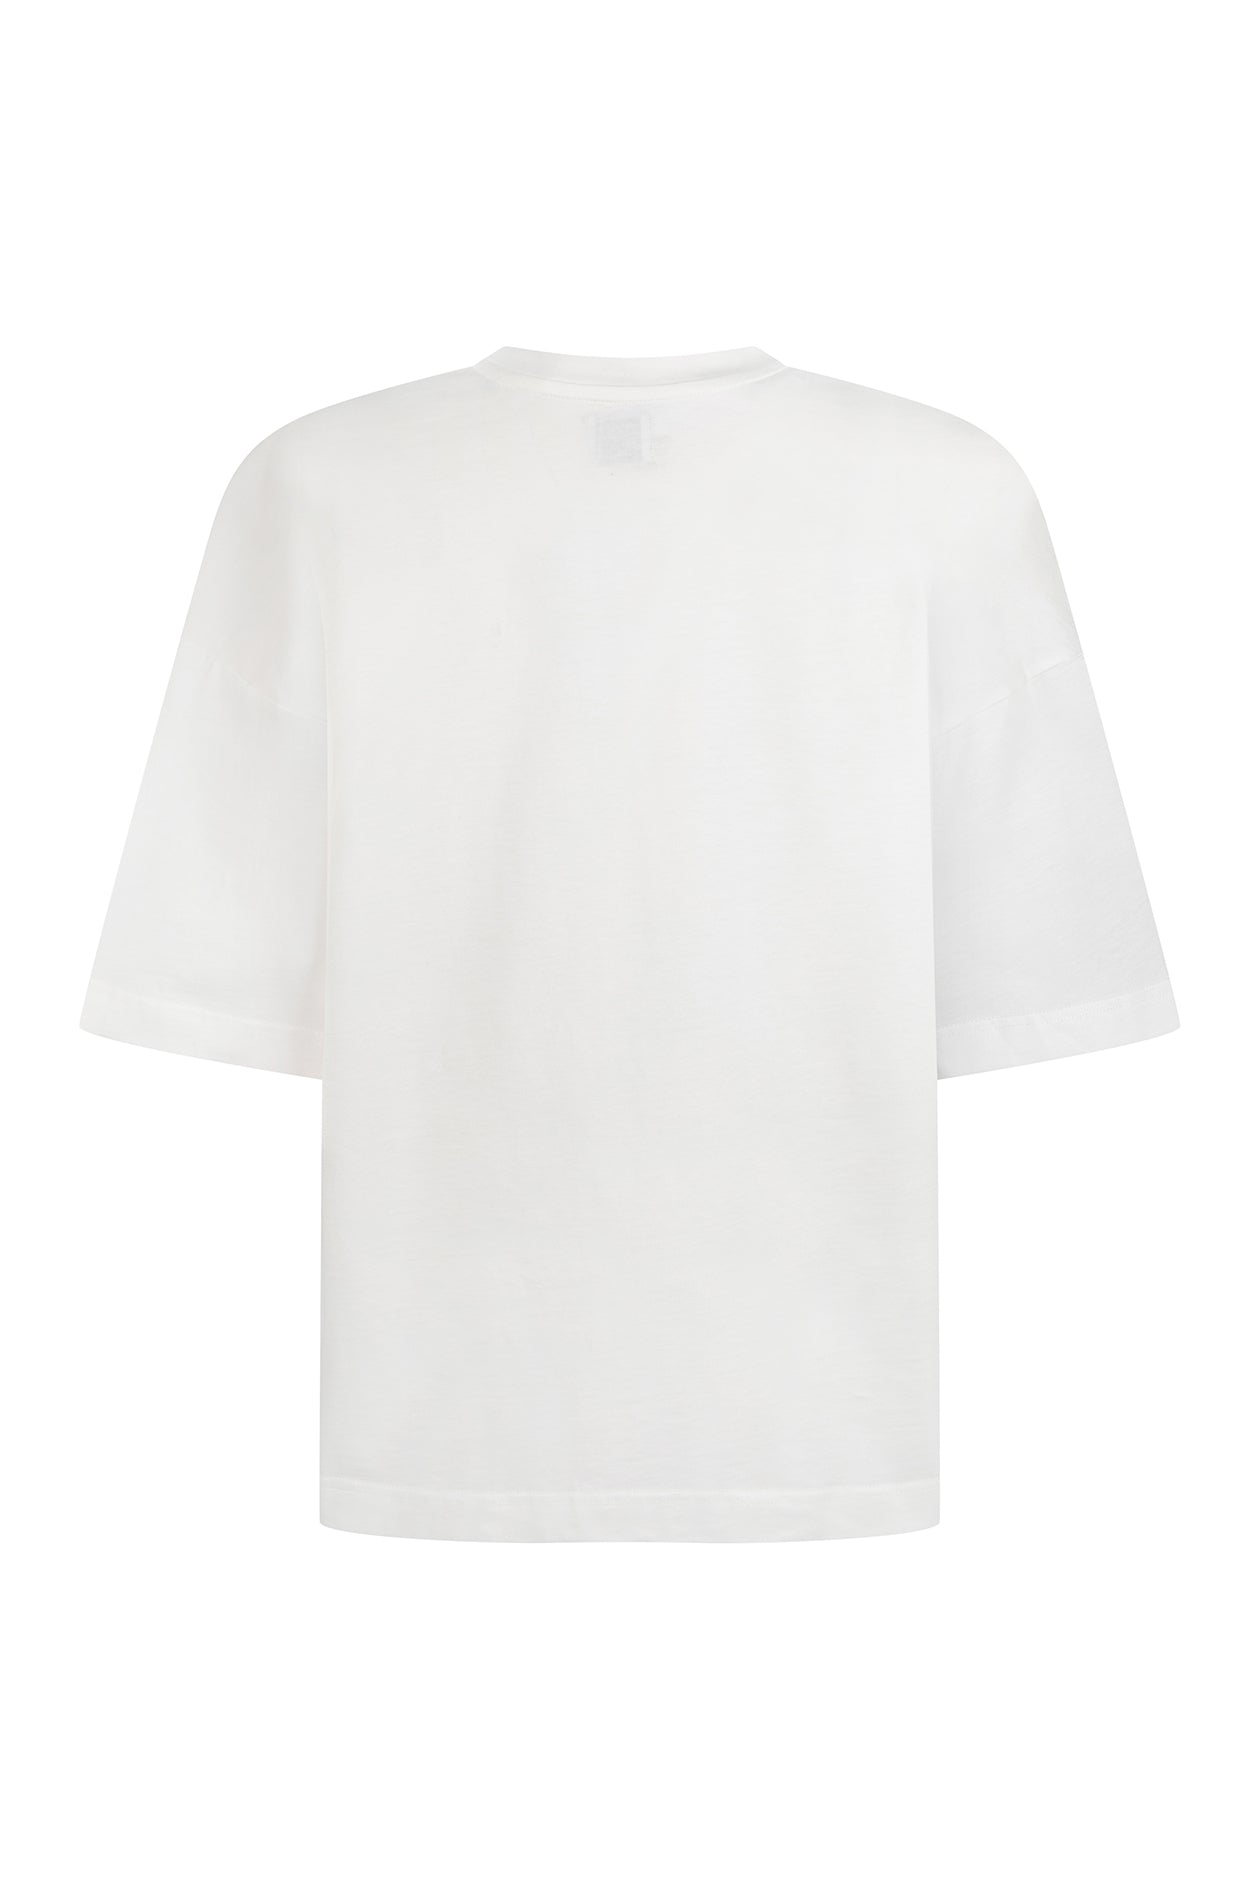 Gibson T-Shirt White